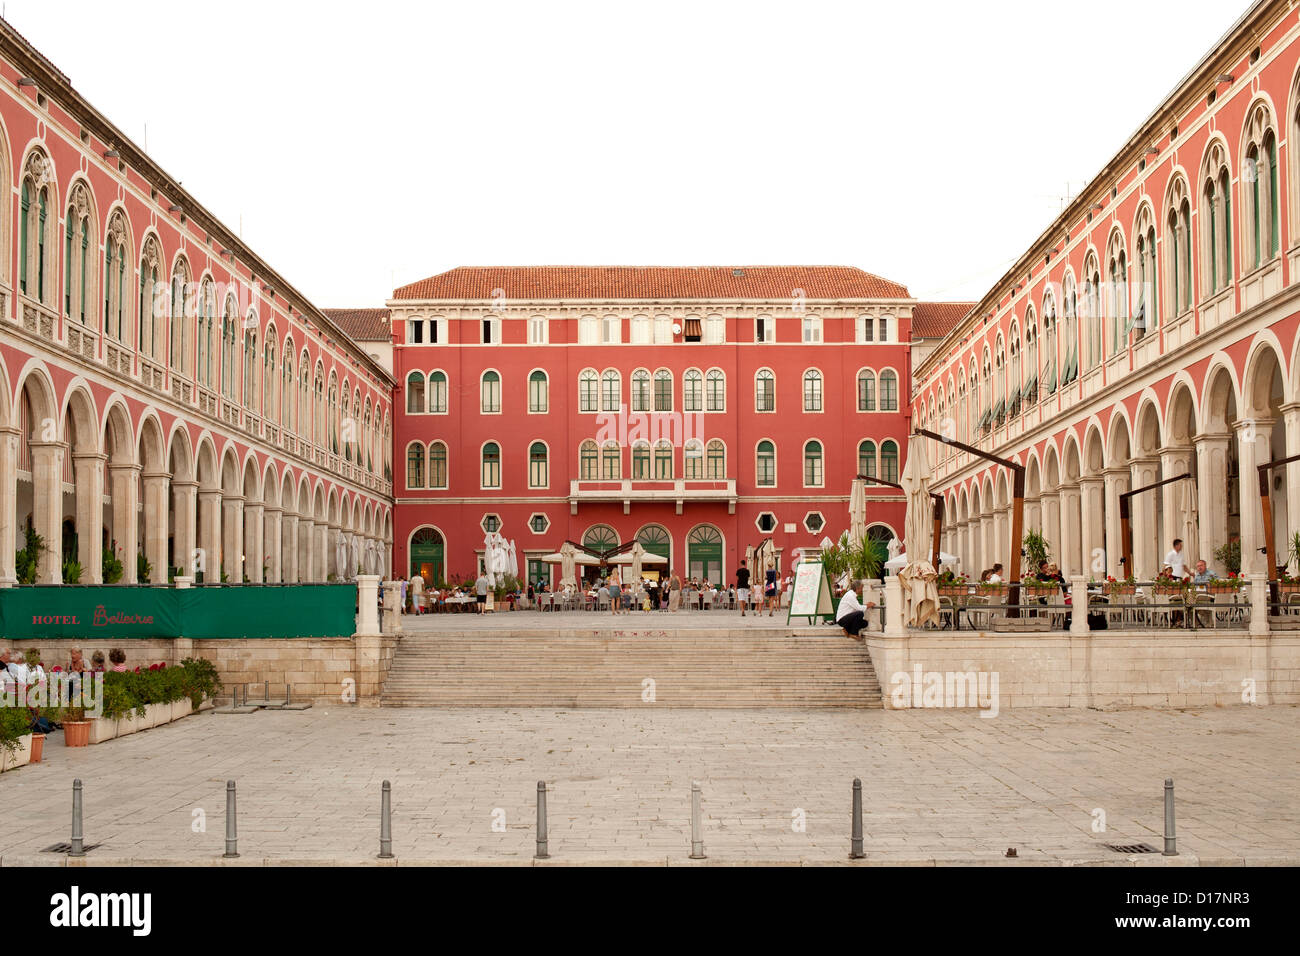 Prokurative (aka Republic Square), a plaza in the city of Split on the Adriatic coast of Croatia. Stock Photo